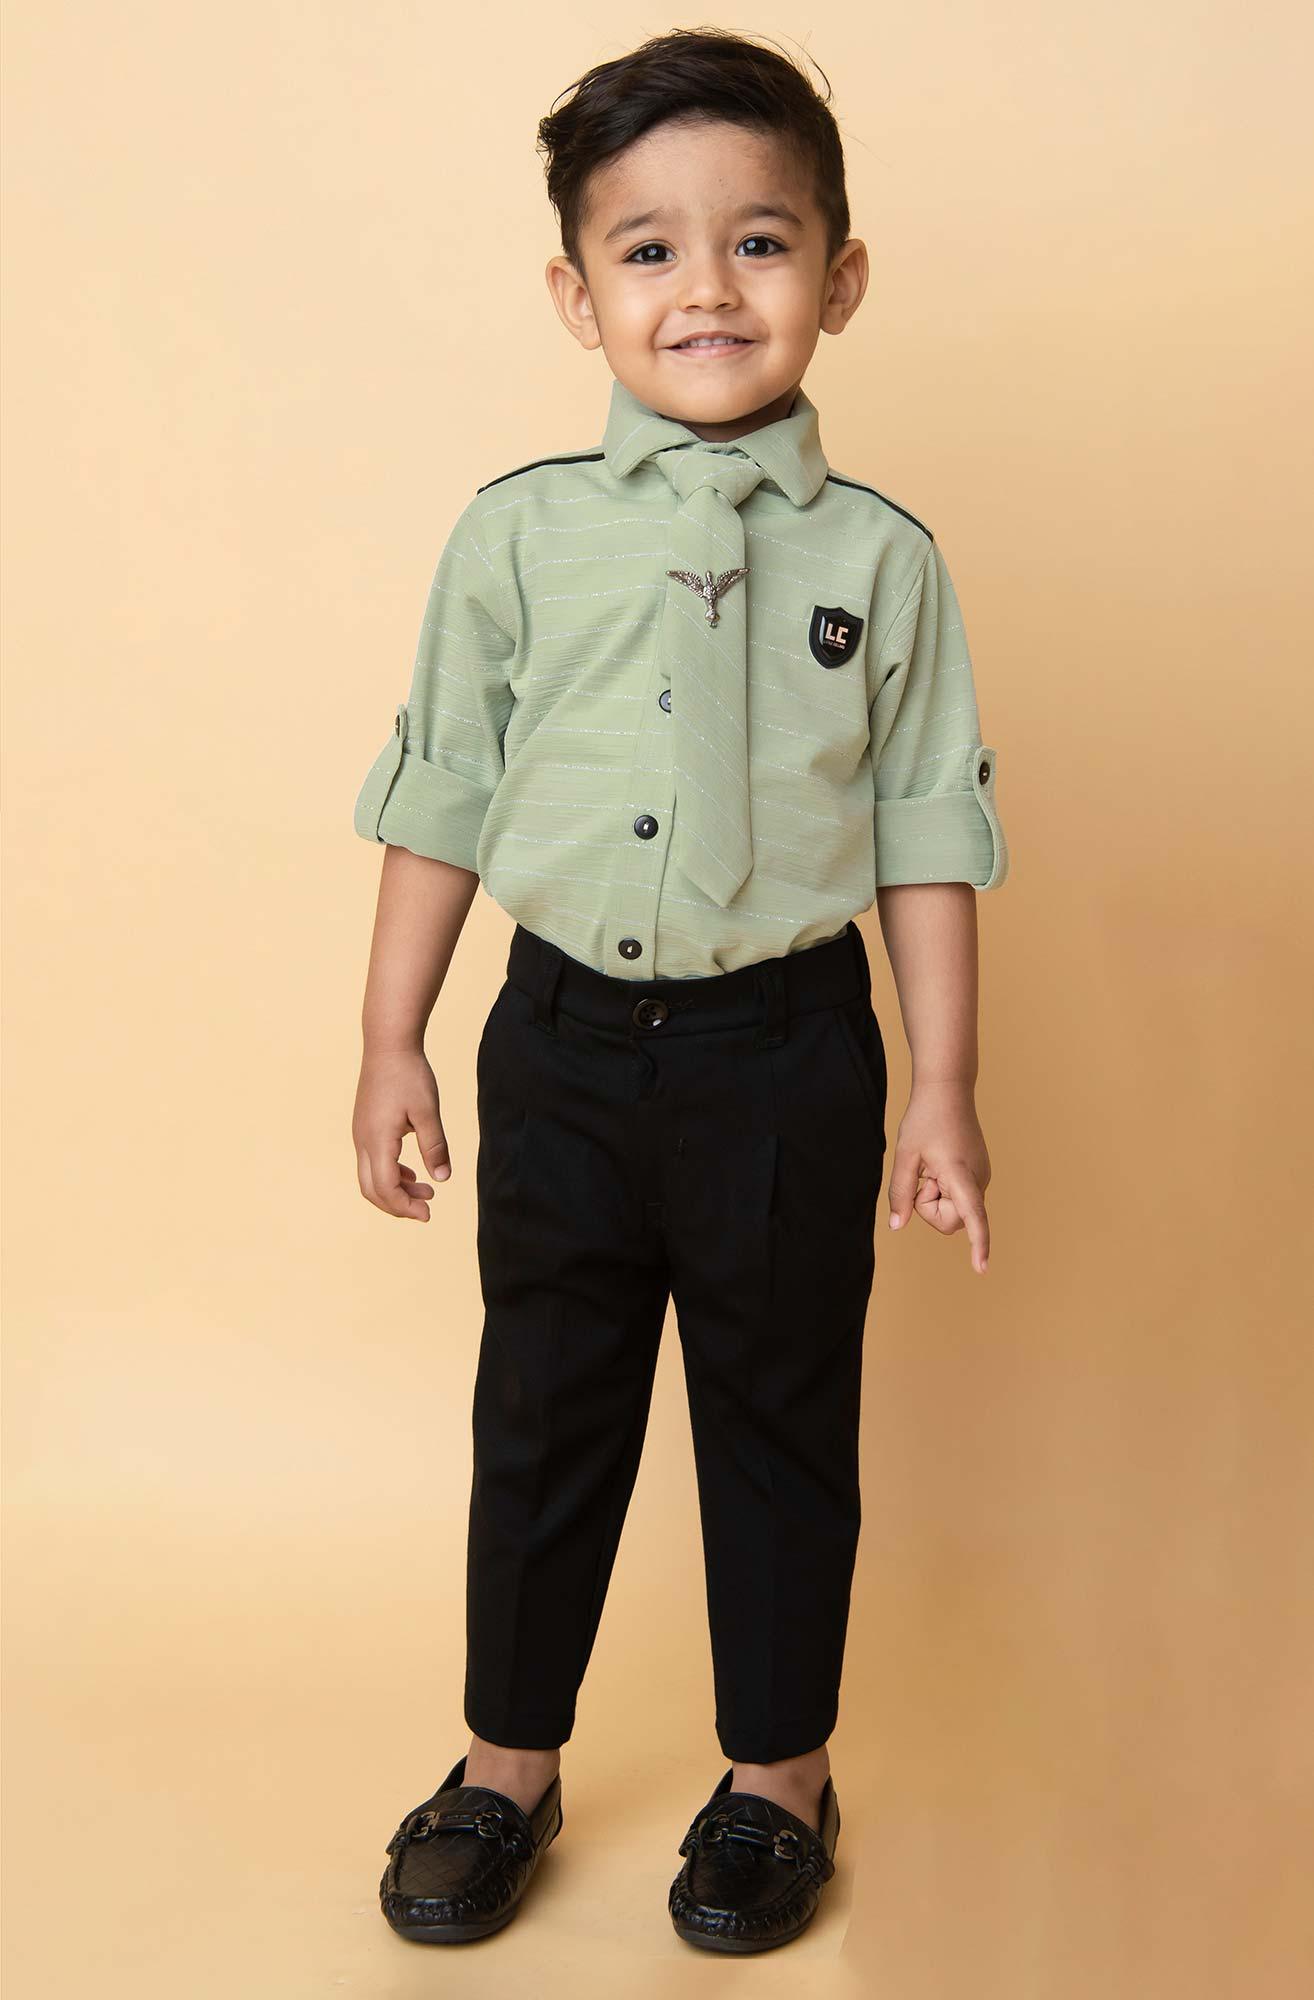 Kids' Stylish Laurel Green Shirt and Black Pant Ensemble - Lagorii Kids